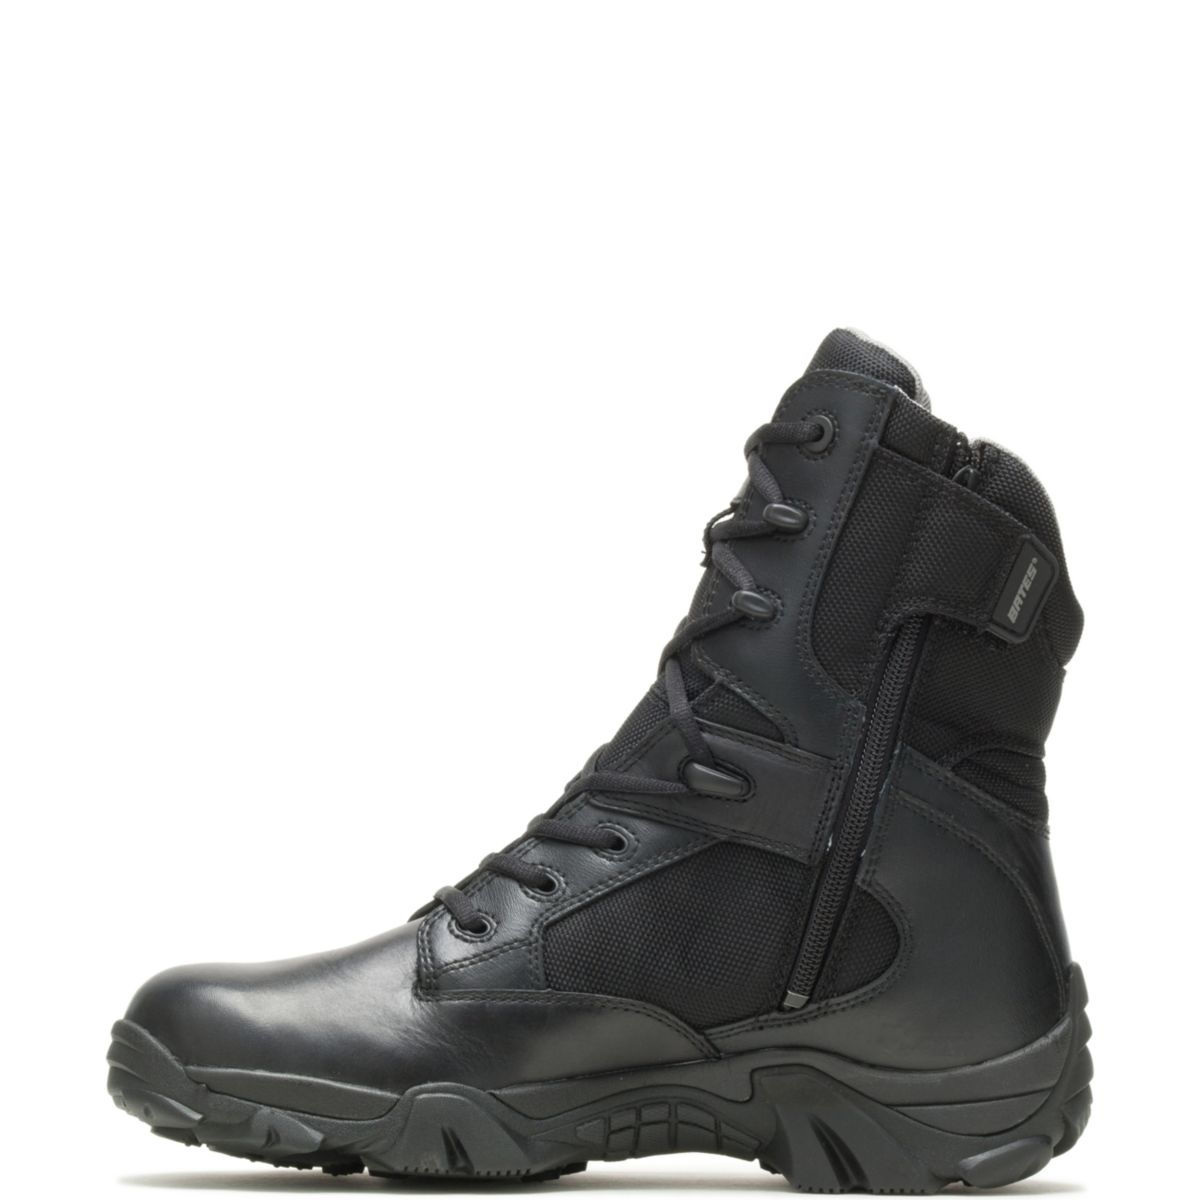 Bates Men's GX-8 Side-Zip GORE-TEXÂ® Waterproof Boot Black - E02268 BLACK - BLACK, 12 X-Wide